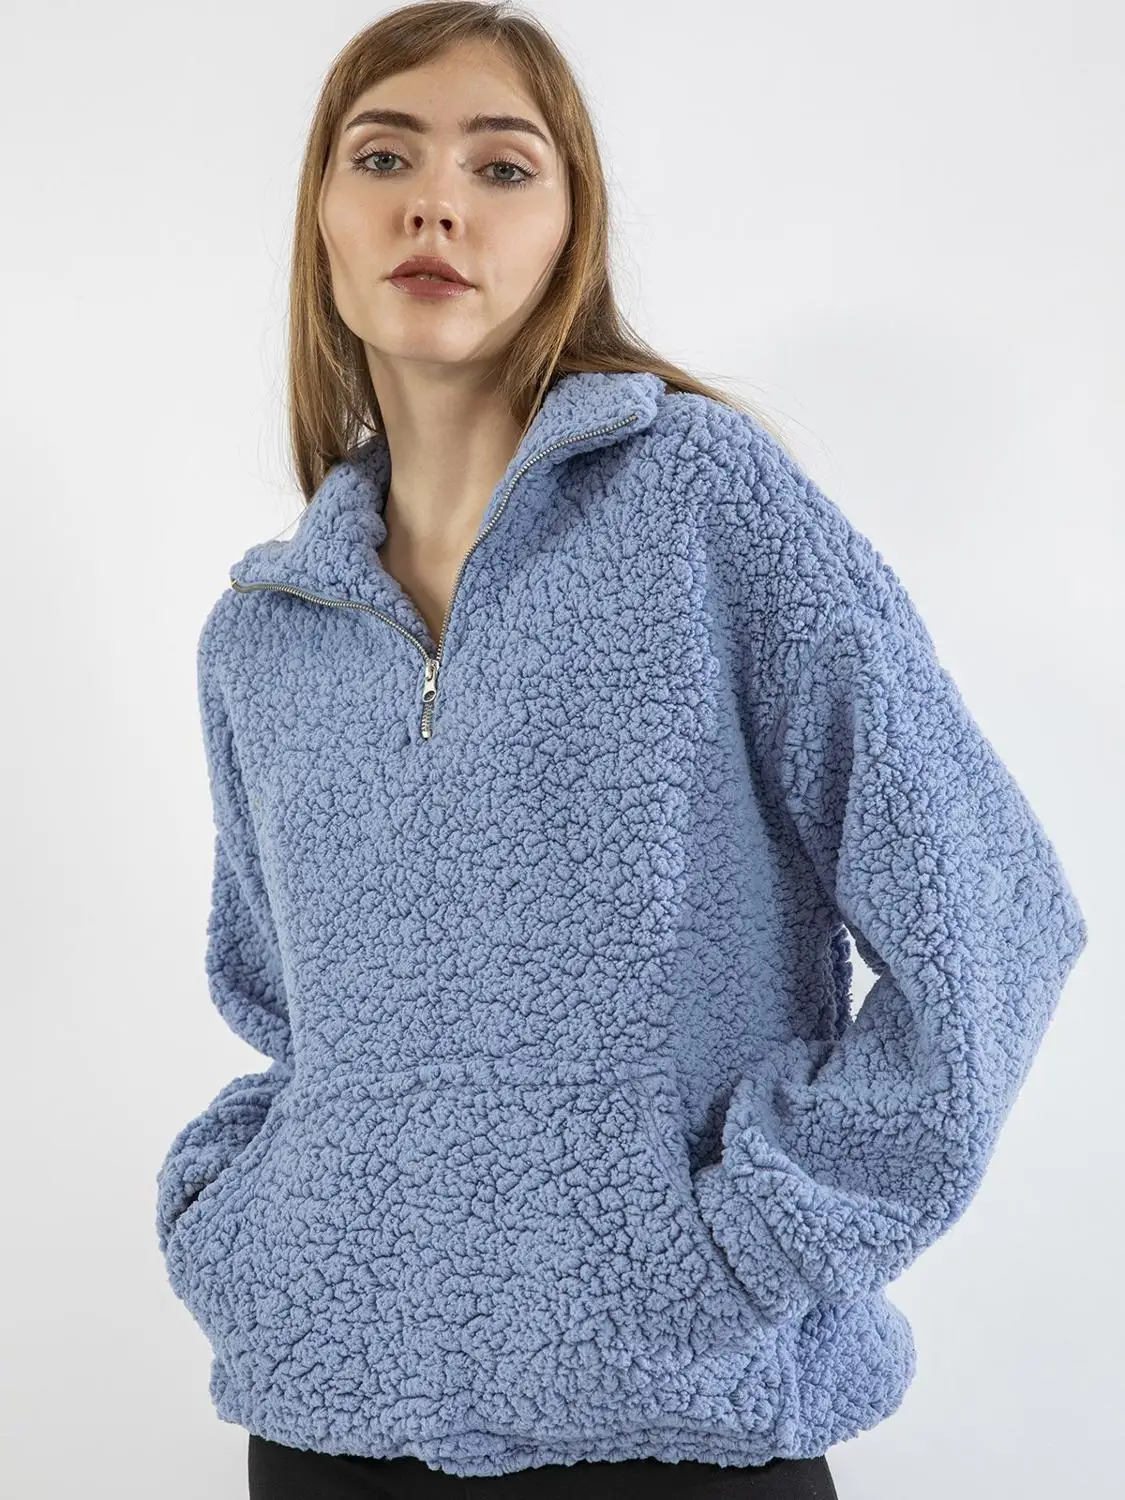 Fluffy Sweatshirt Women Plush Autumun Winter Tops Long Sleeve Warm Solid